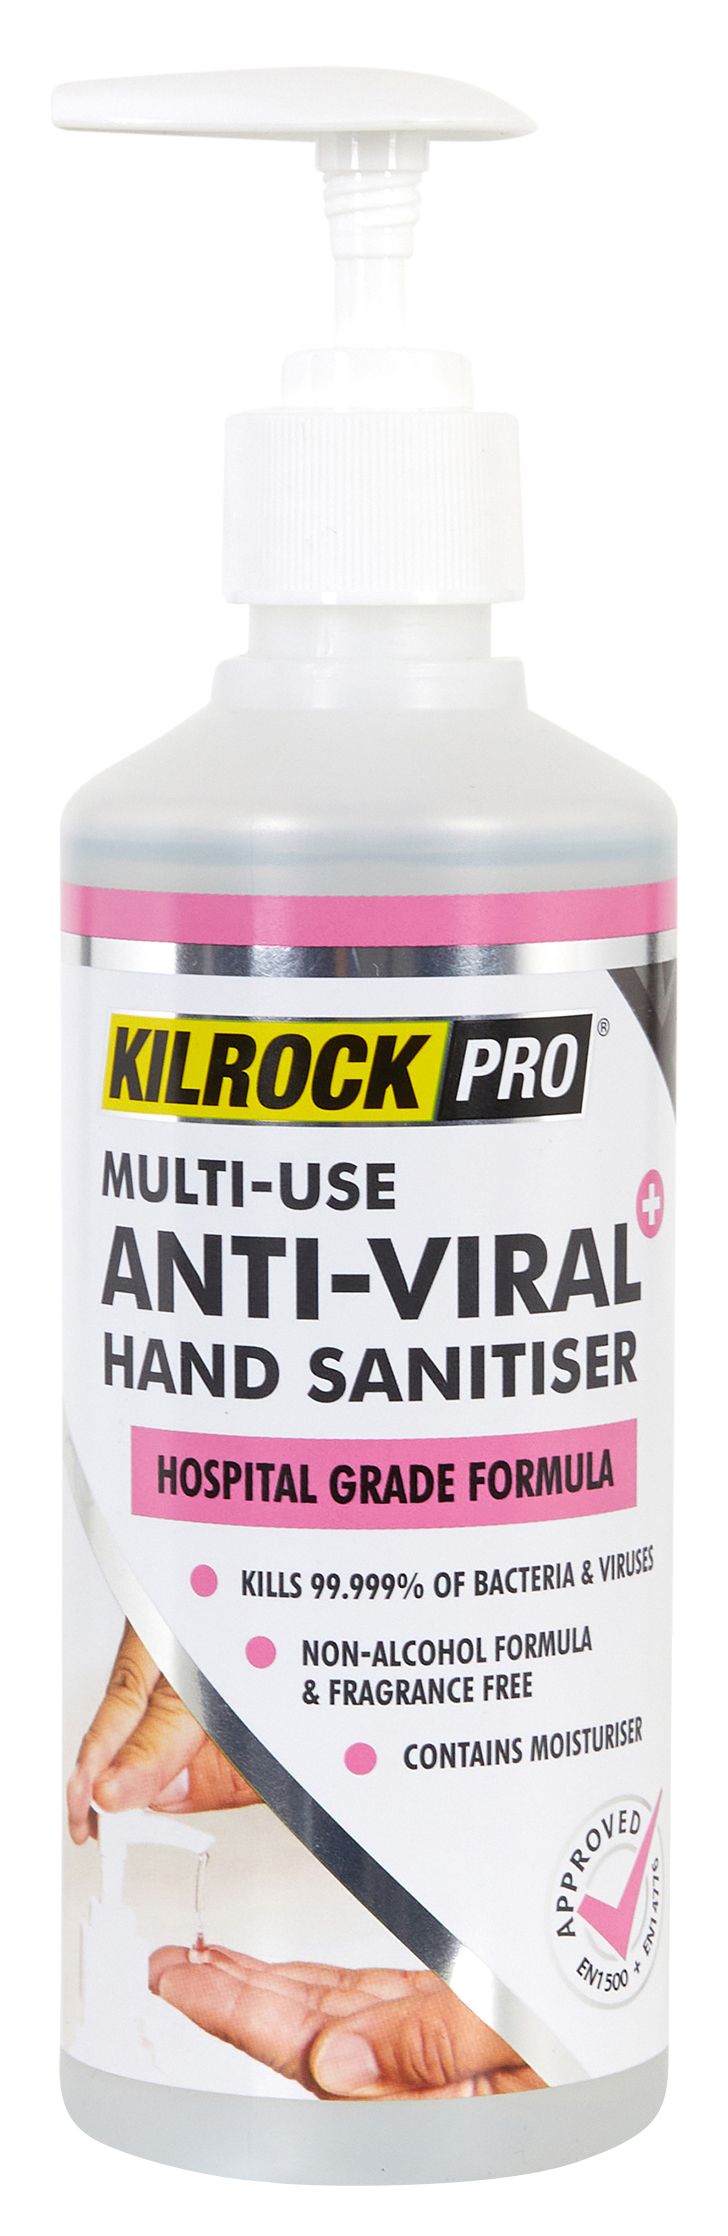 Image of KilrockPRO Anti-Viral Hand Sanitiser - 400ml